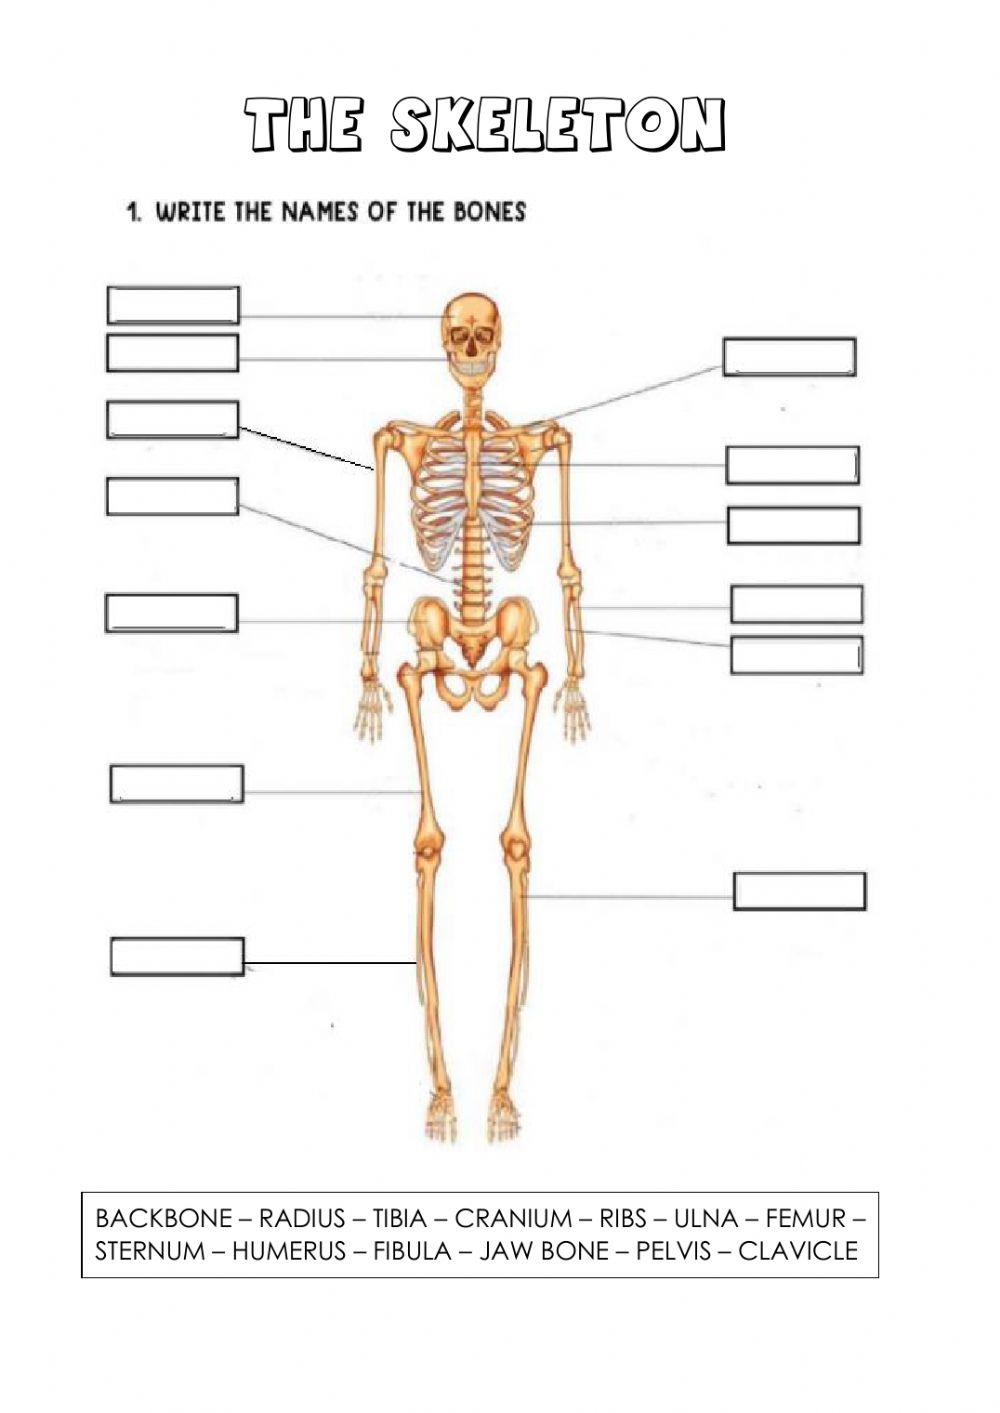 Bone of the skeleton